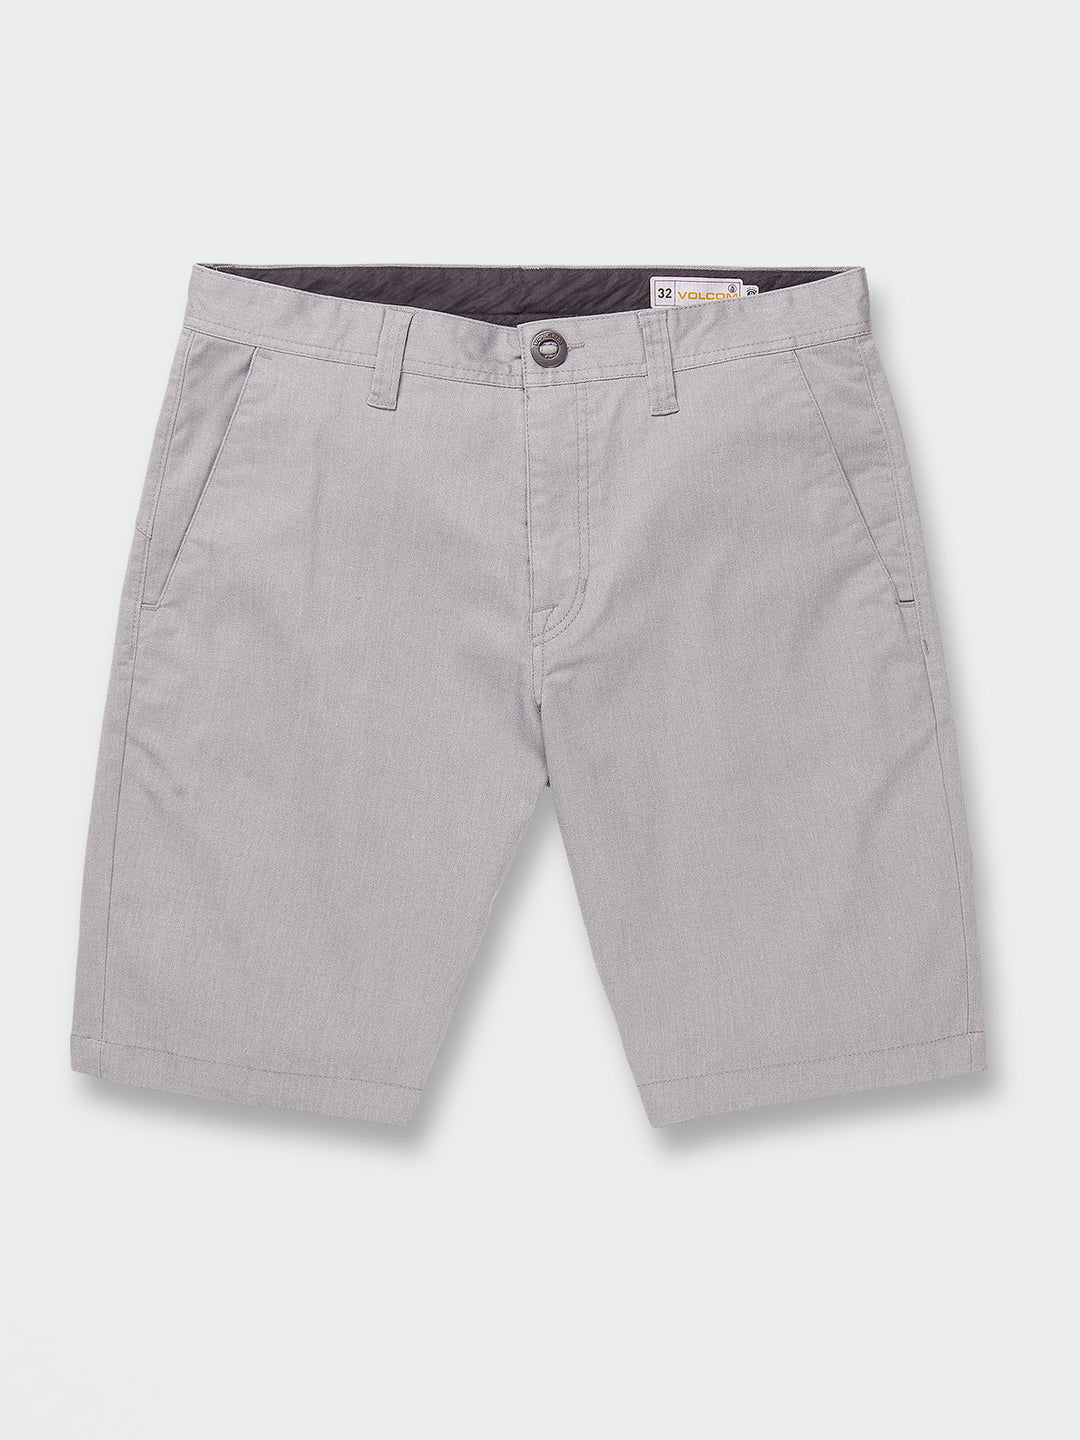 Volcom Frickin Modern Stretch Shorts - Grey* - Sun Diego Boardshop